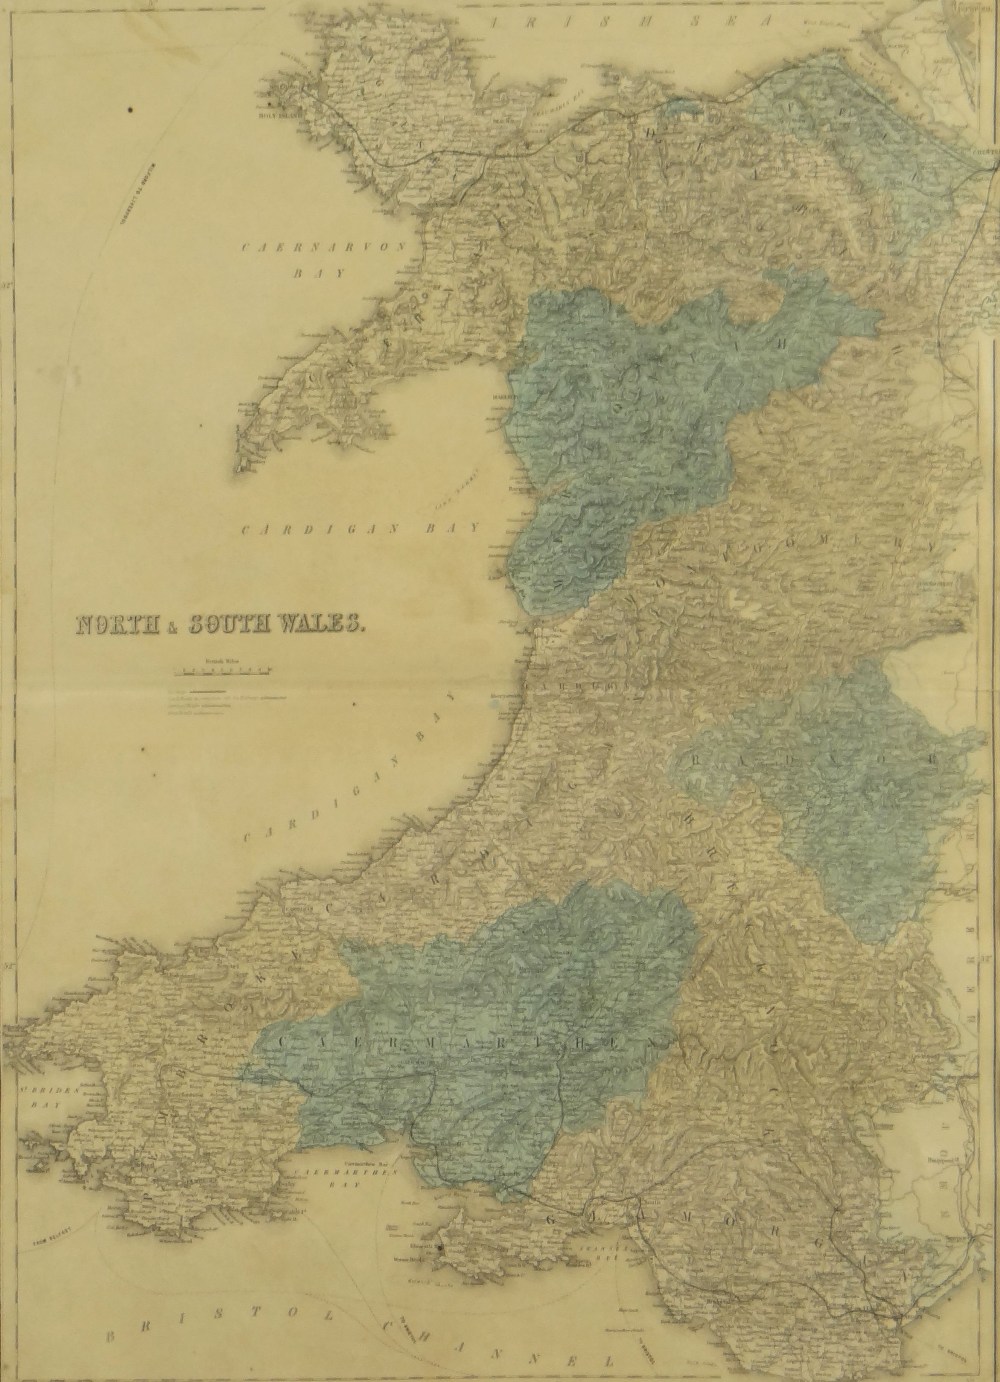 JOHN BARTHOLOMEW coloured touring road and rail map - 'North & South Wales', circa, 1890, 58 x